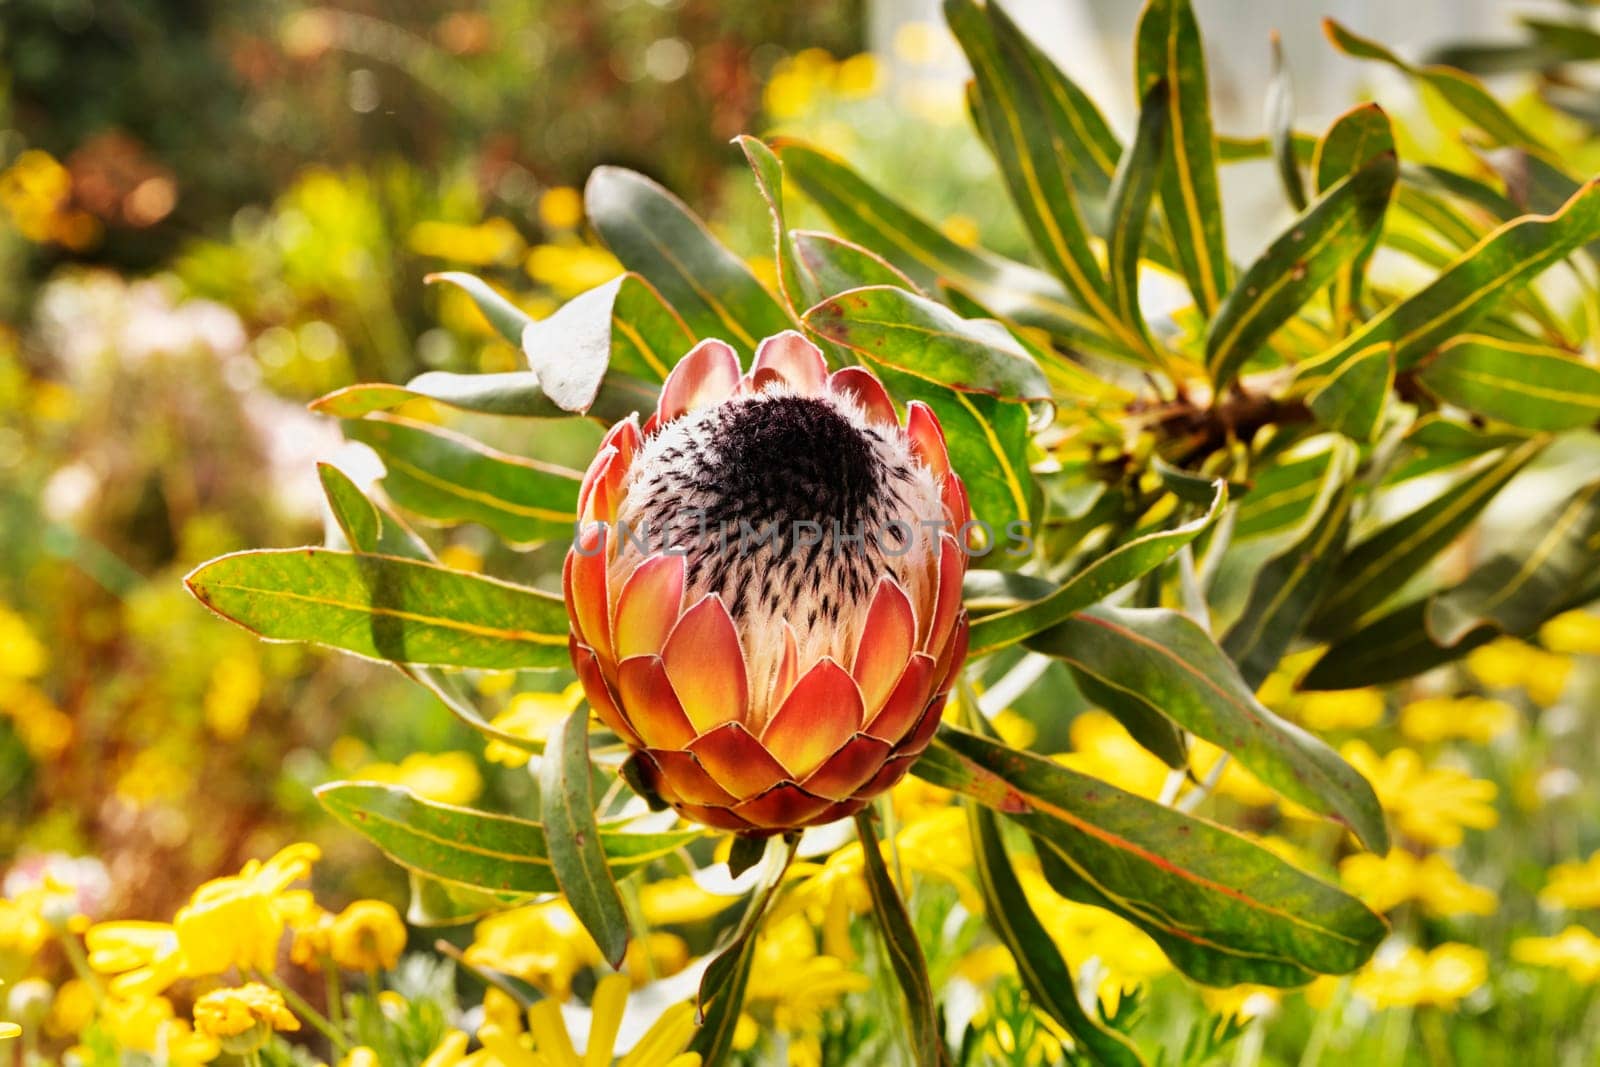 Flower of sugarbush protea by victimewalker